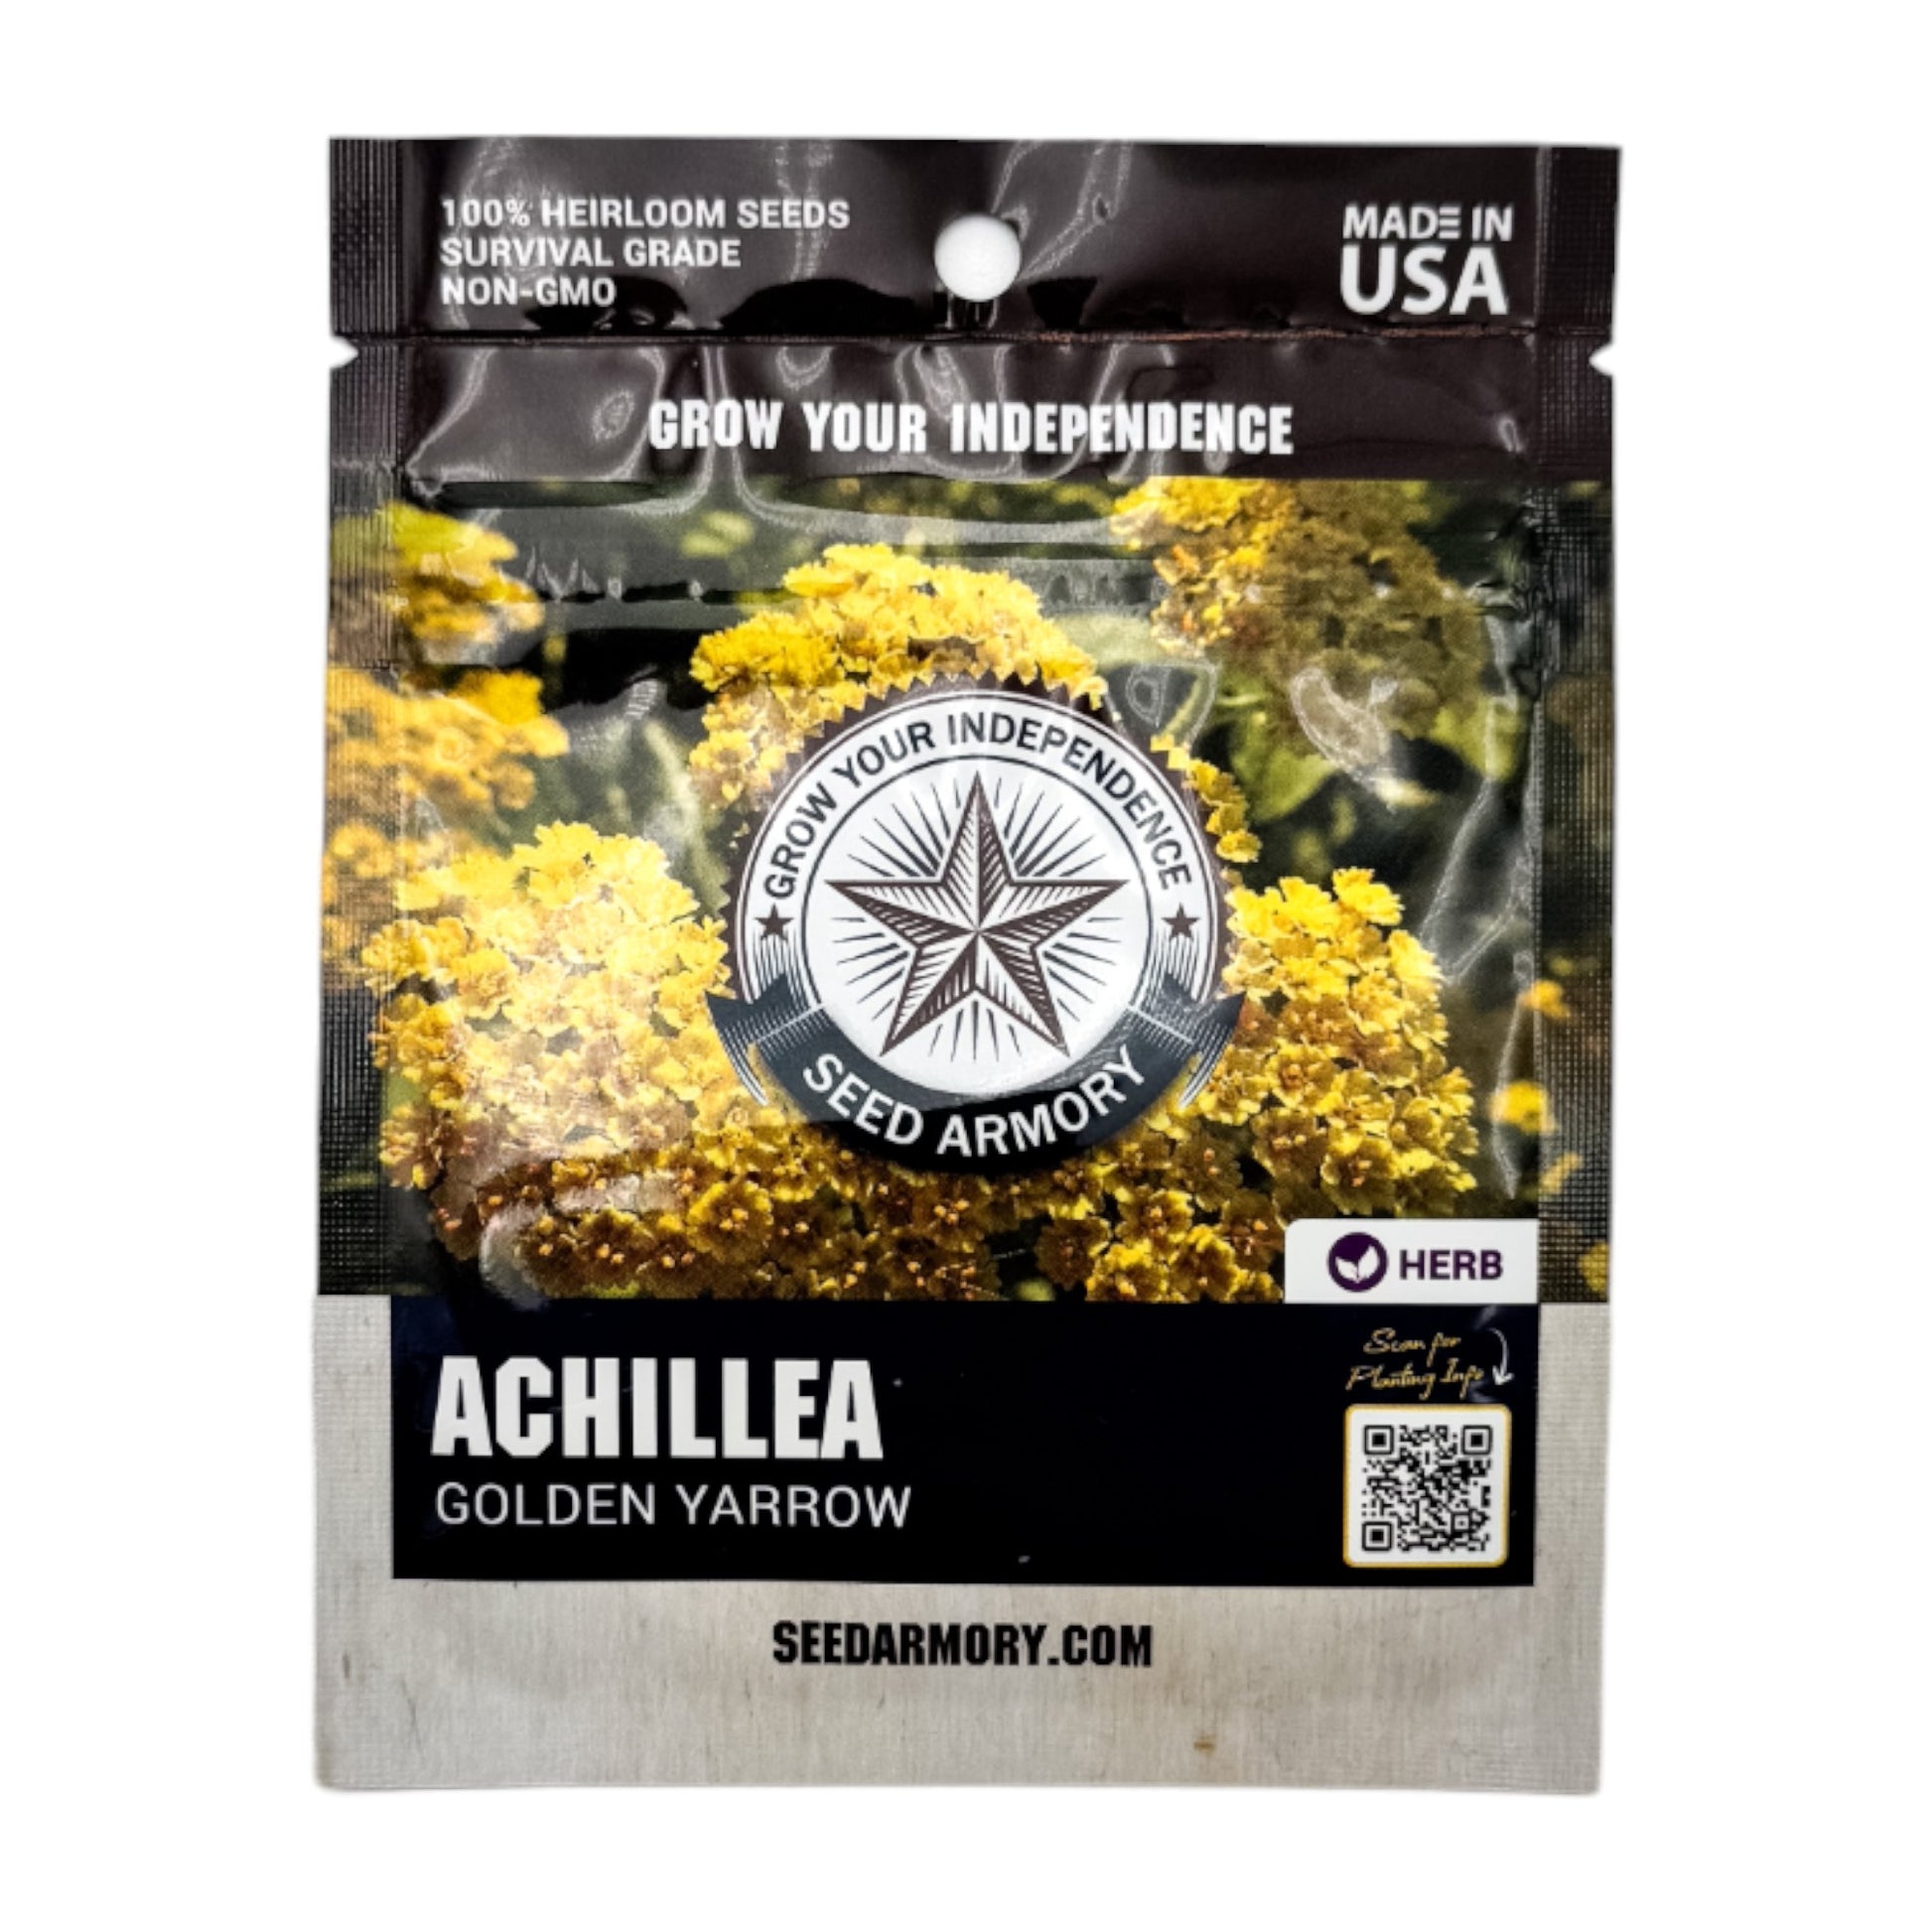 One-ounce packet of Achillea 'Golden Yarrow' heirloom seeds